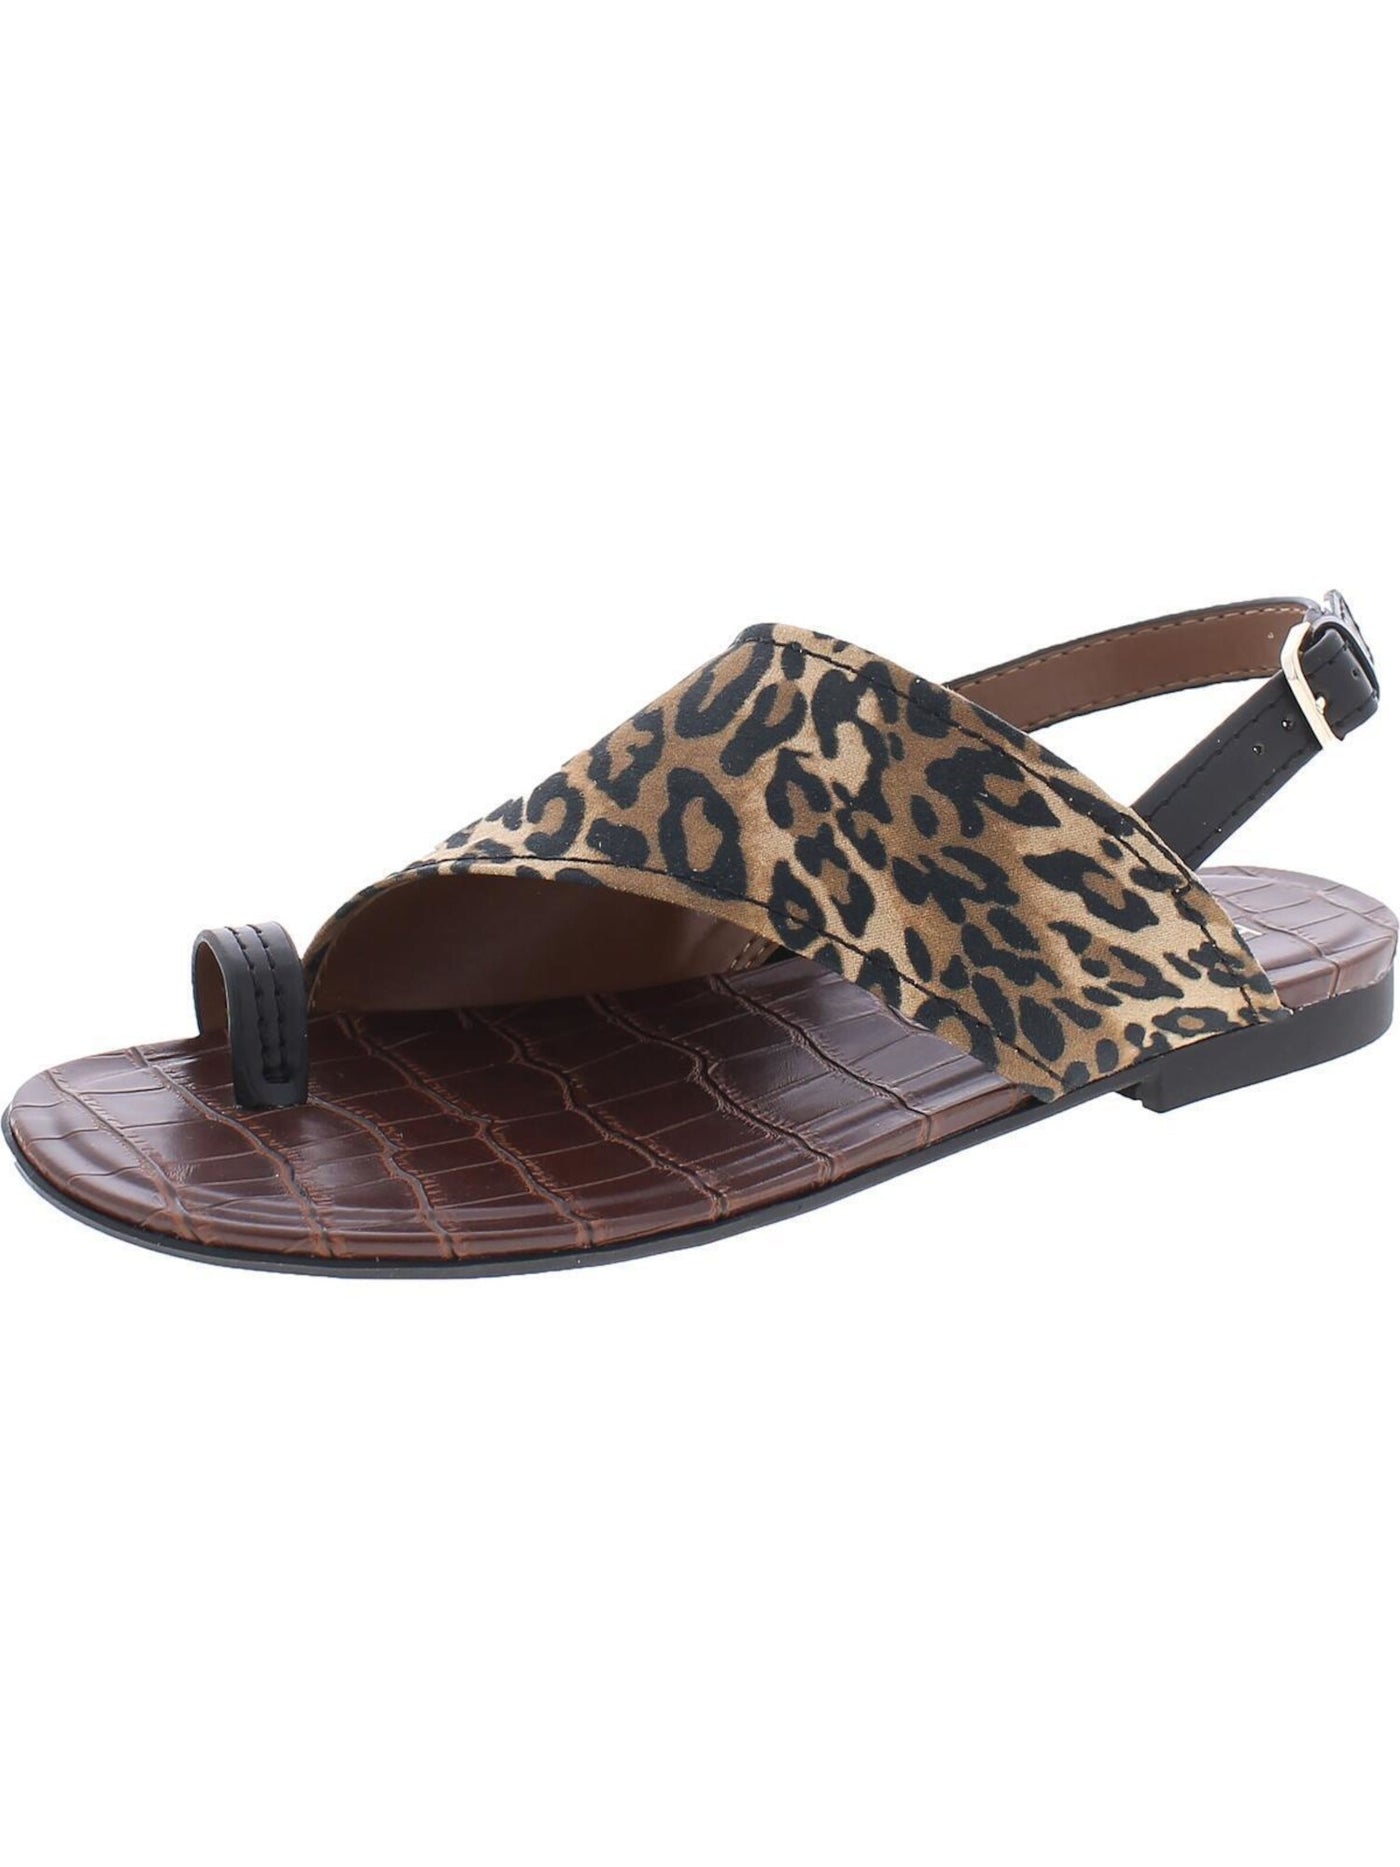 NATURALIZER Womens Brown Cheetah Print Adjustable Strap Comfort Seanna Round Toe Block Heel Buckle Slingback Sandal 11 M